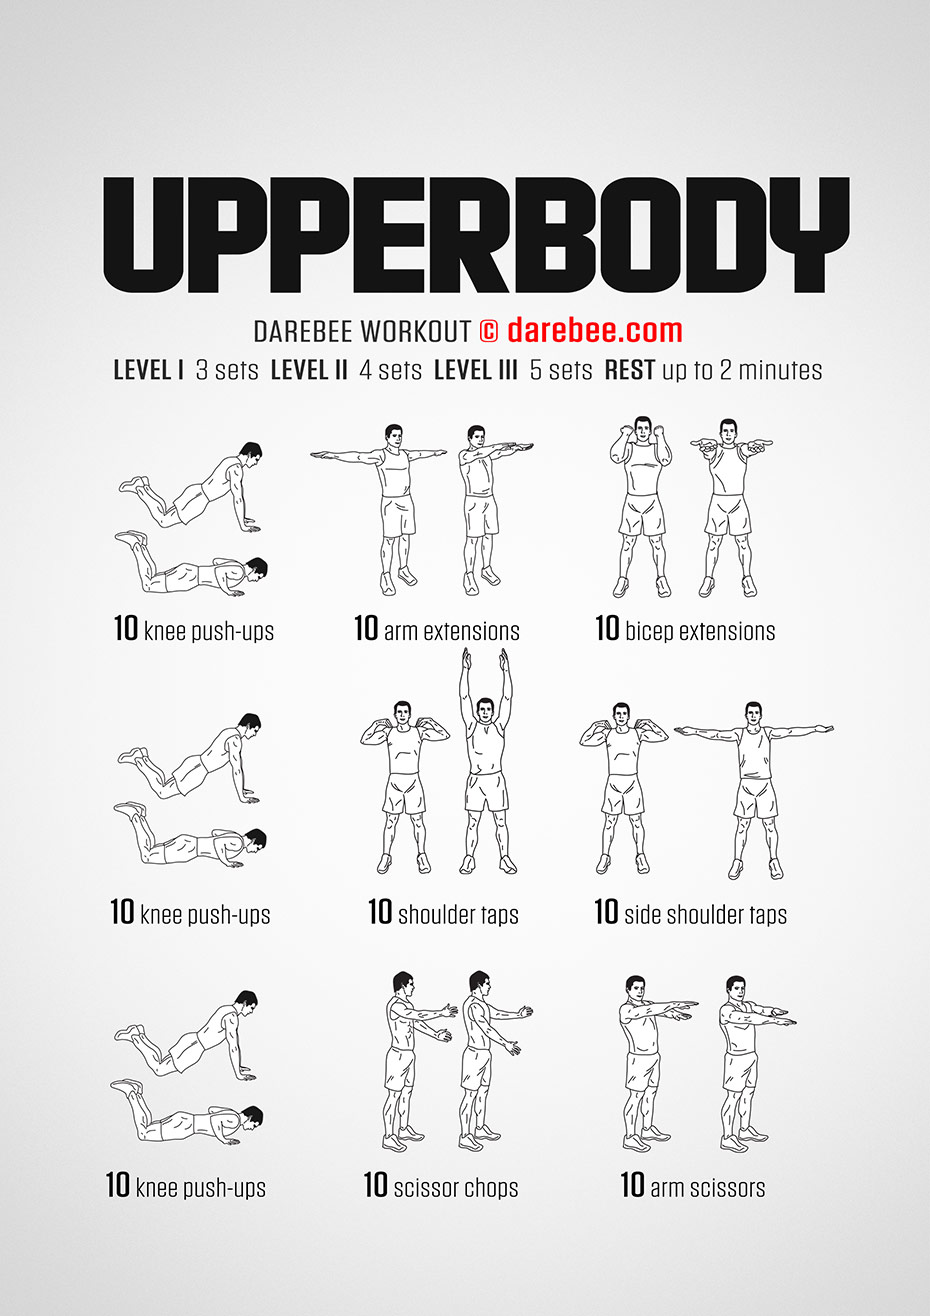 10 BEST UPPER BODY EXERCISES FOR WOMAN